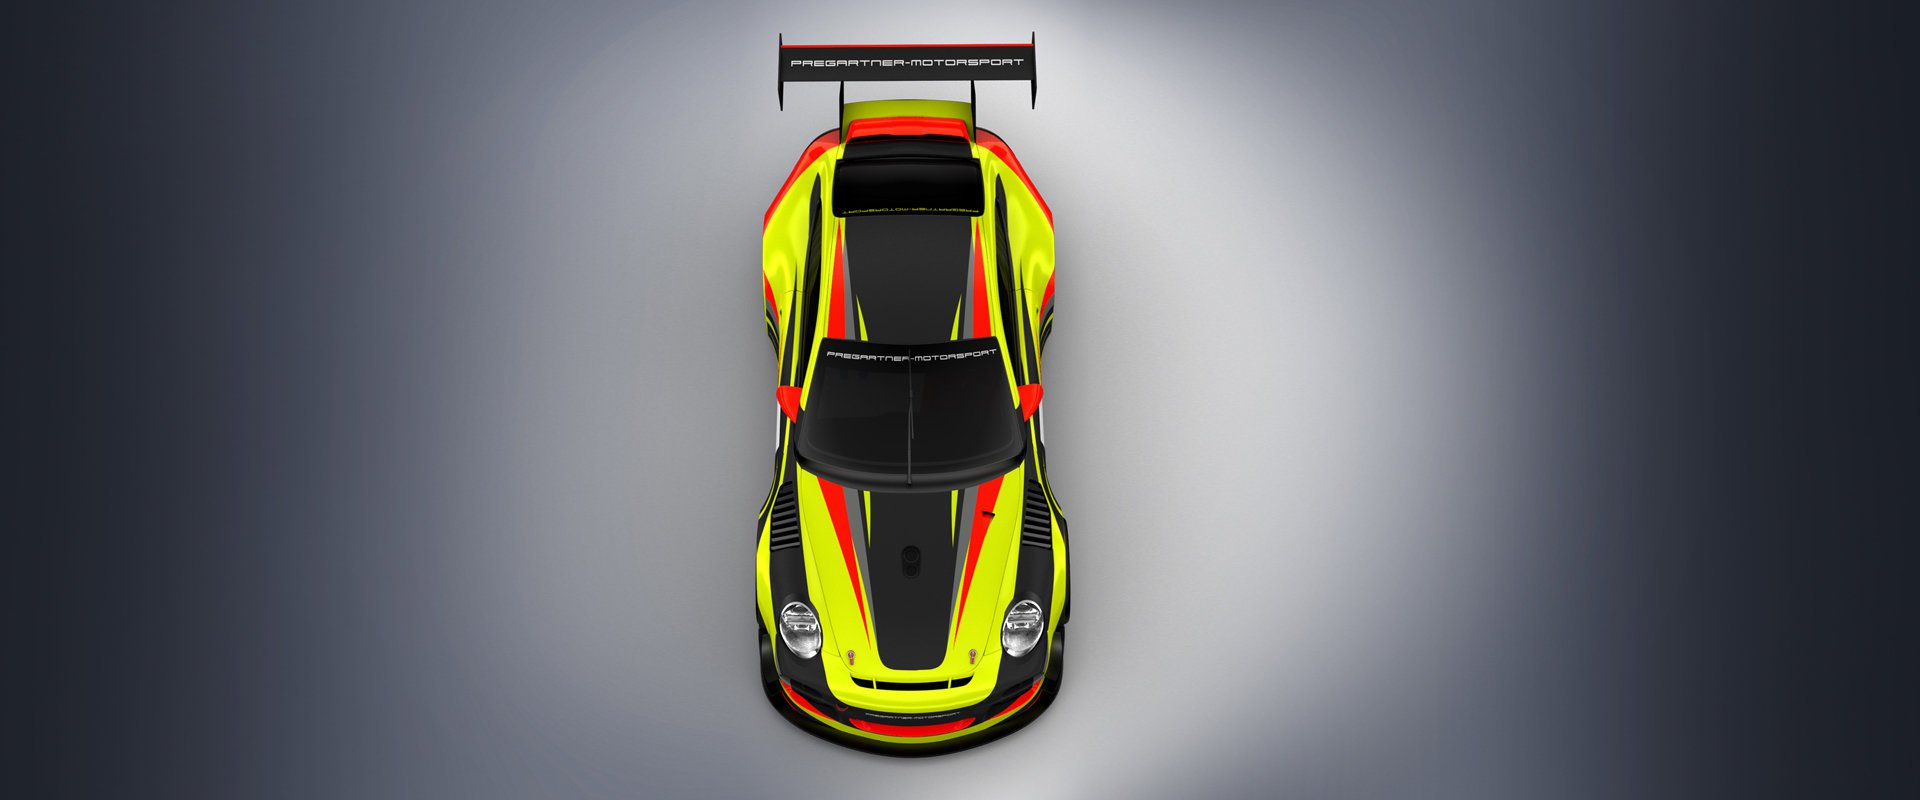 Pregartner Motorsport livery design #5